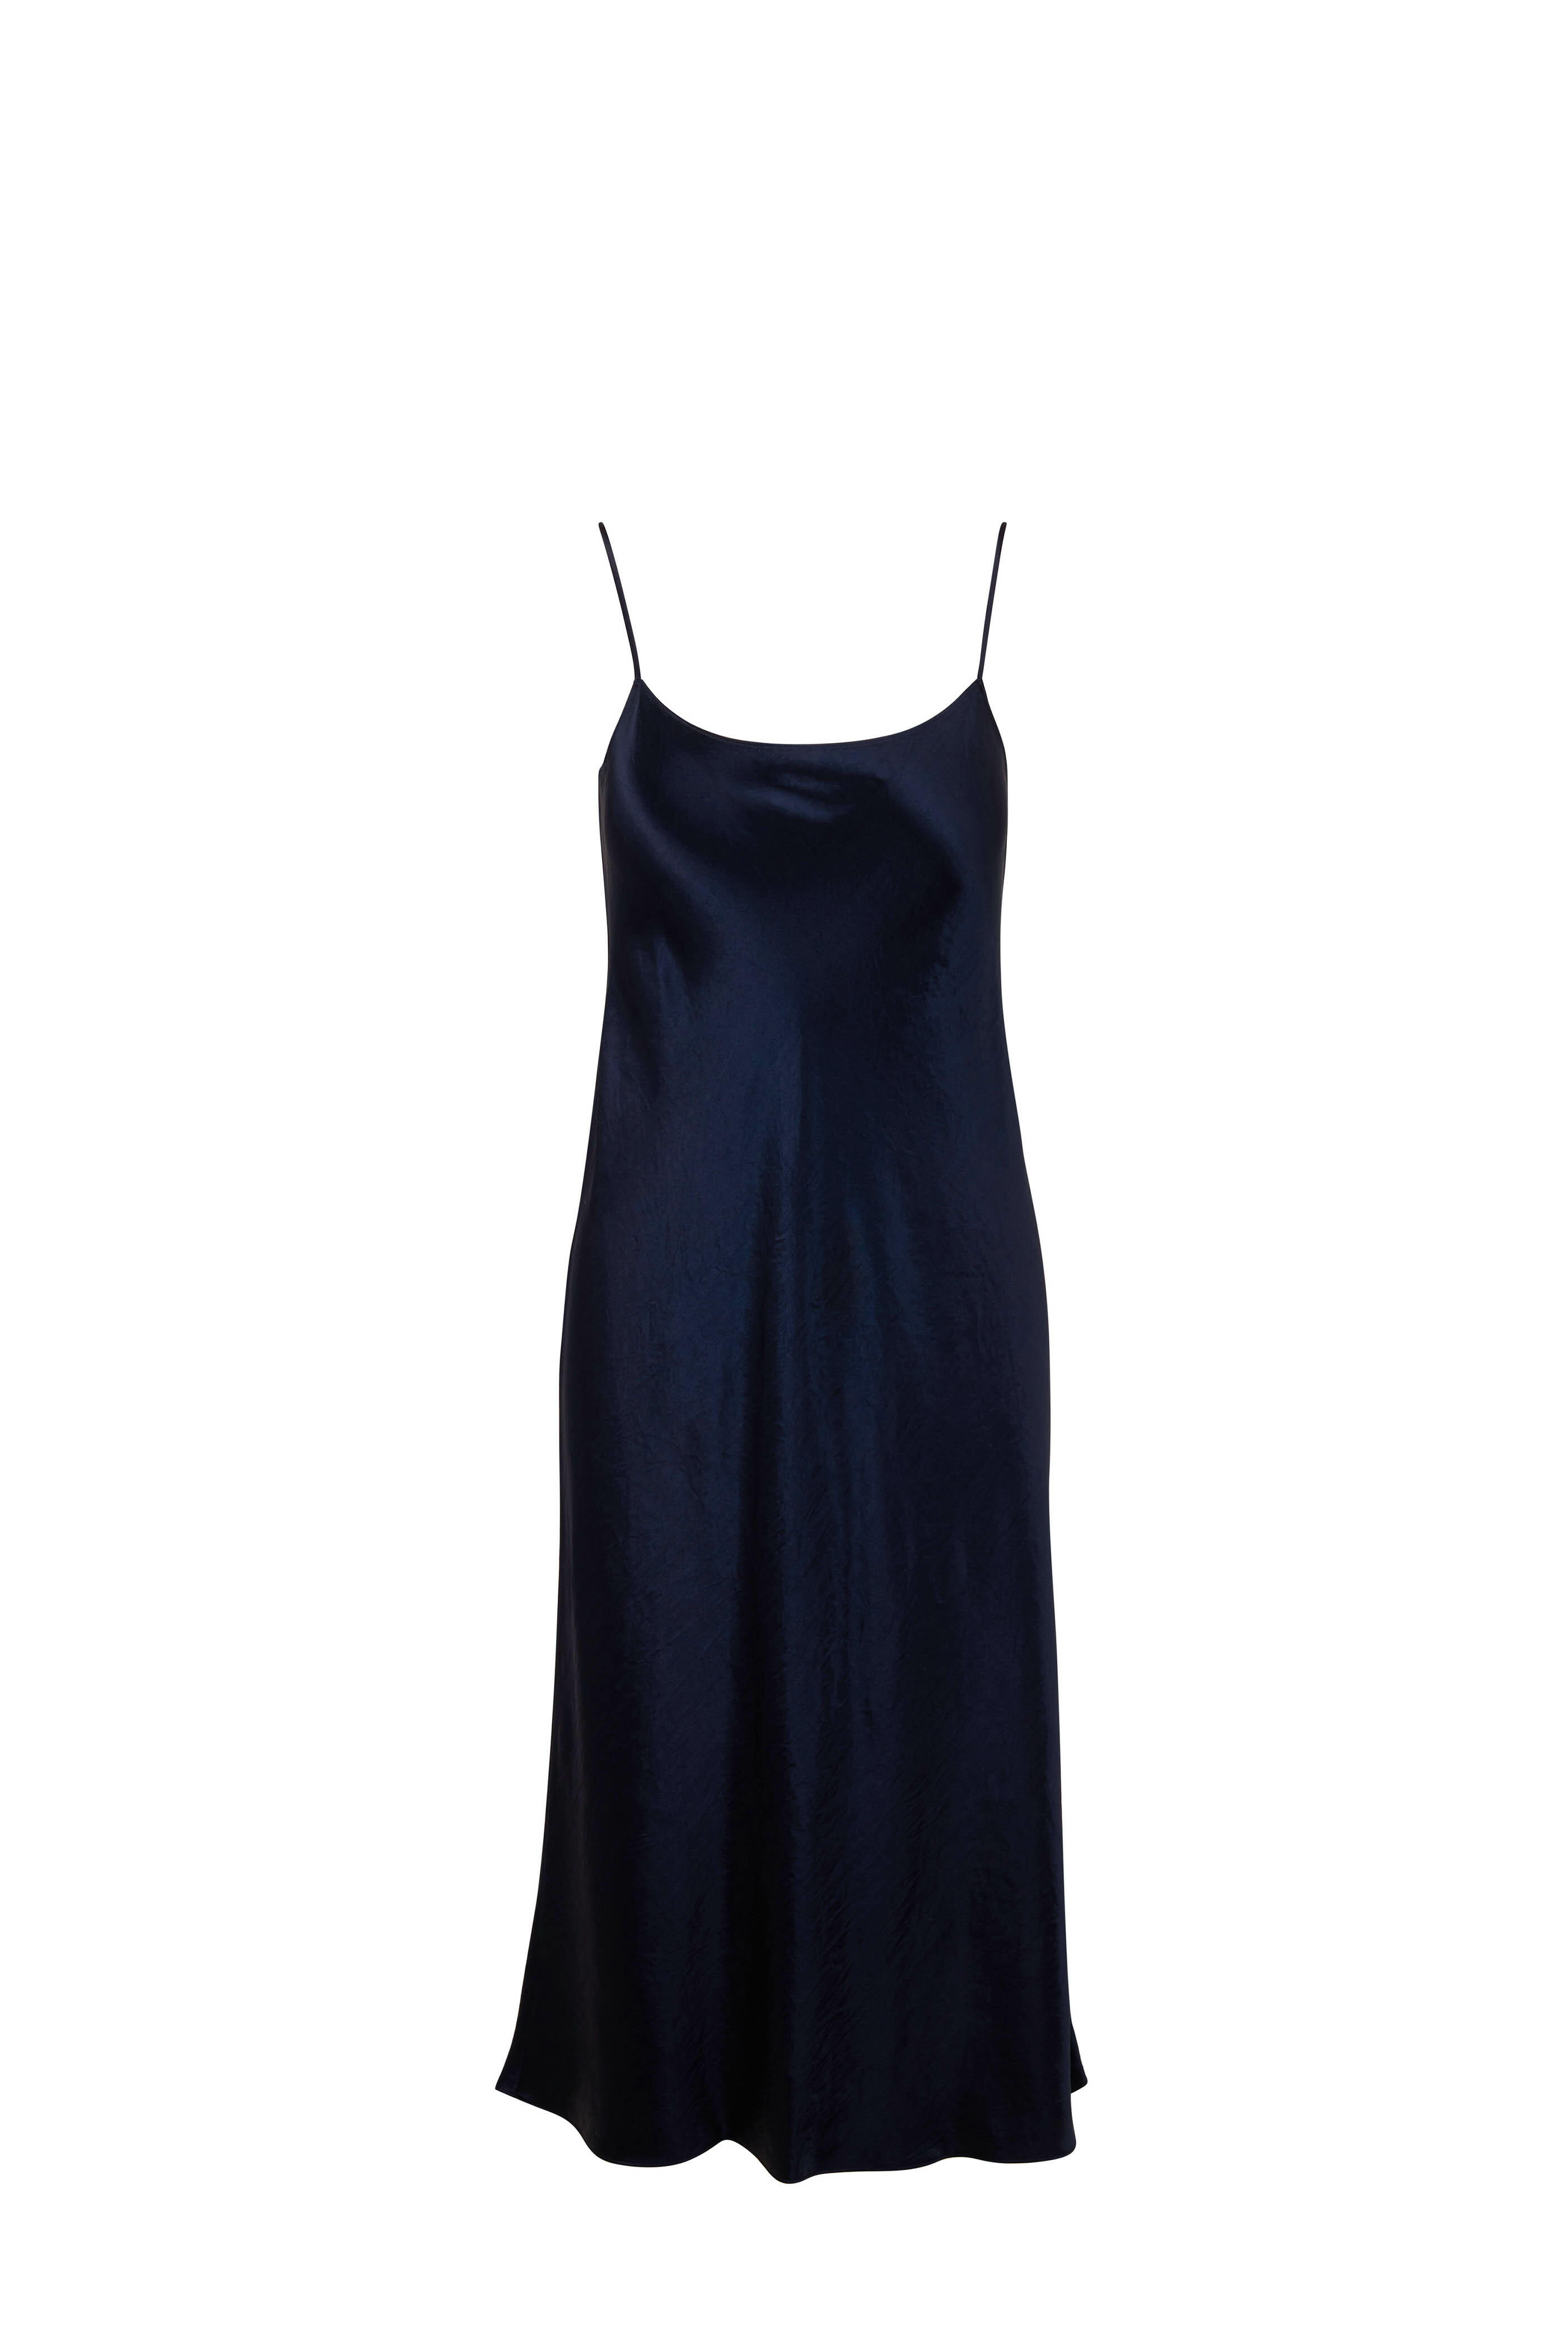 Vince - Coastal Blue Satin Tank Dress | Mitchell Stores